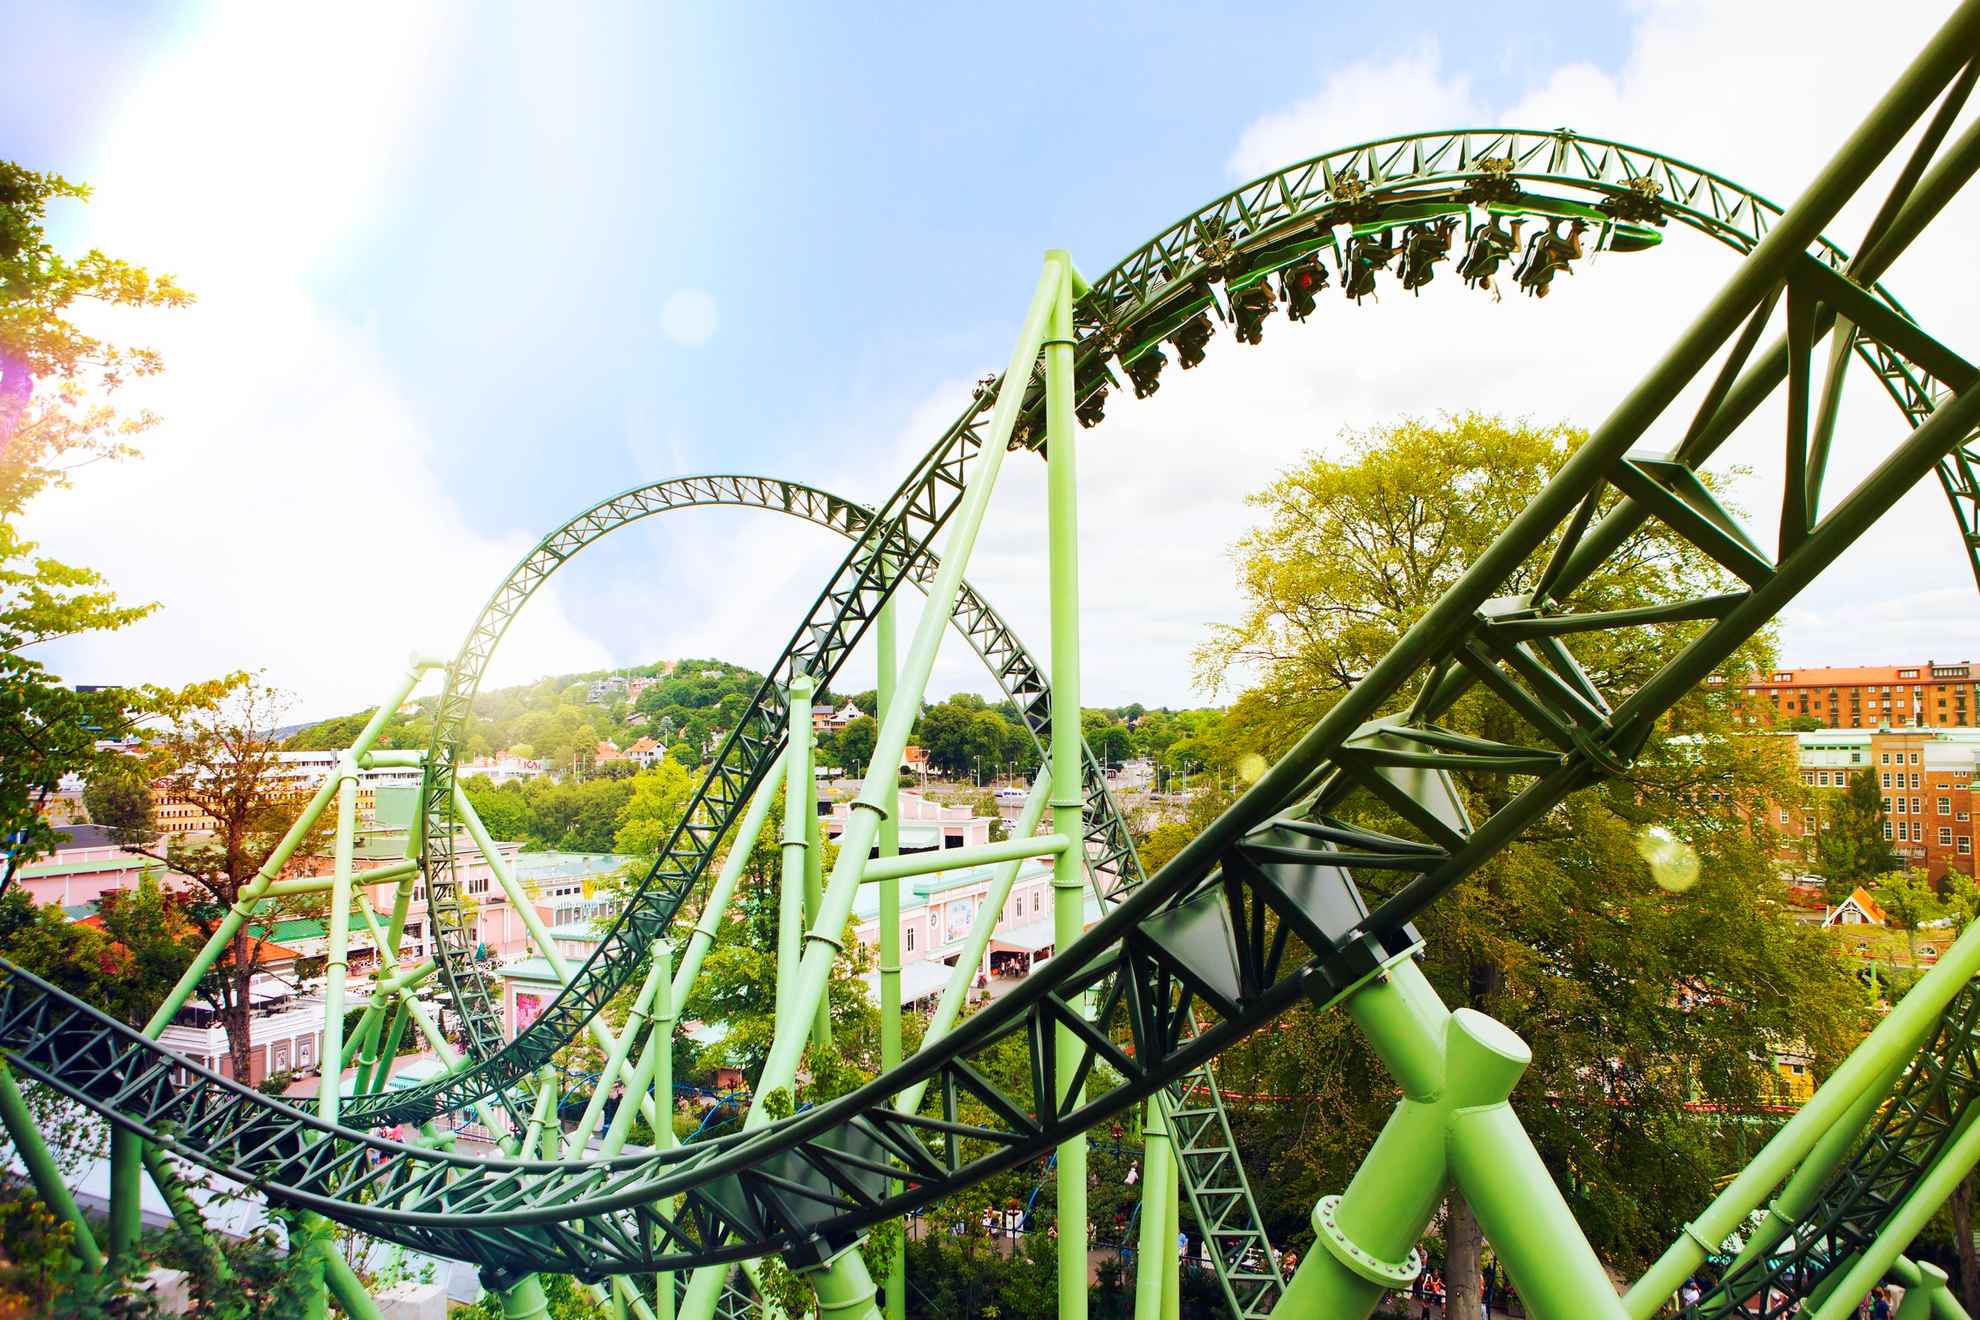 A green rollercoaster at Liseberg.